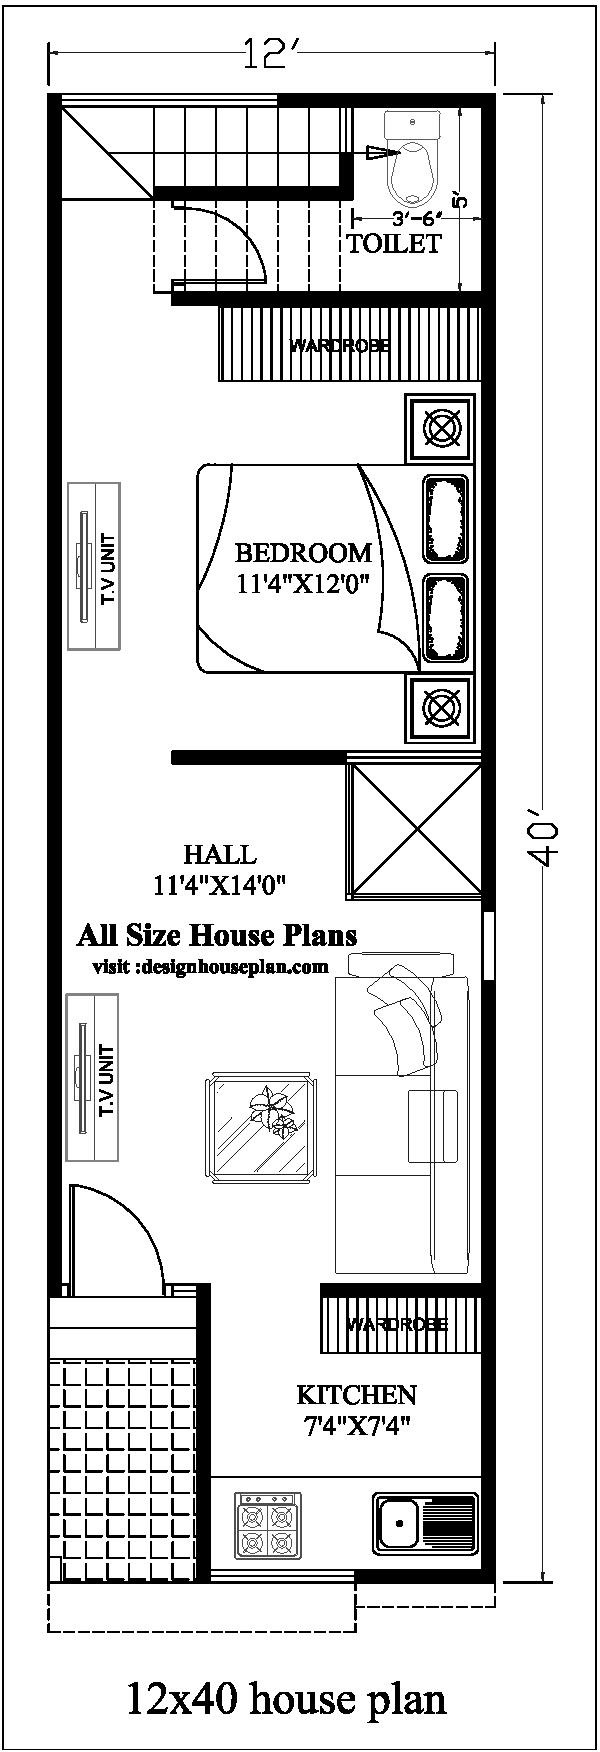 12x40 house plan - 12 * 40 house plan ground floor - 12 * 45 house plan